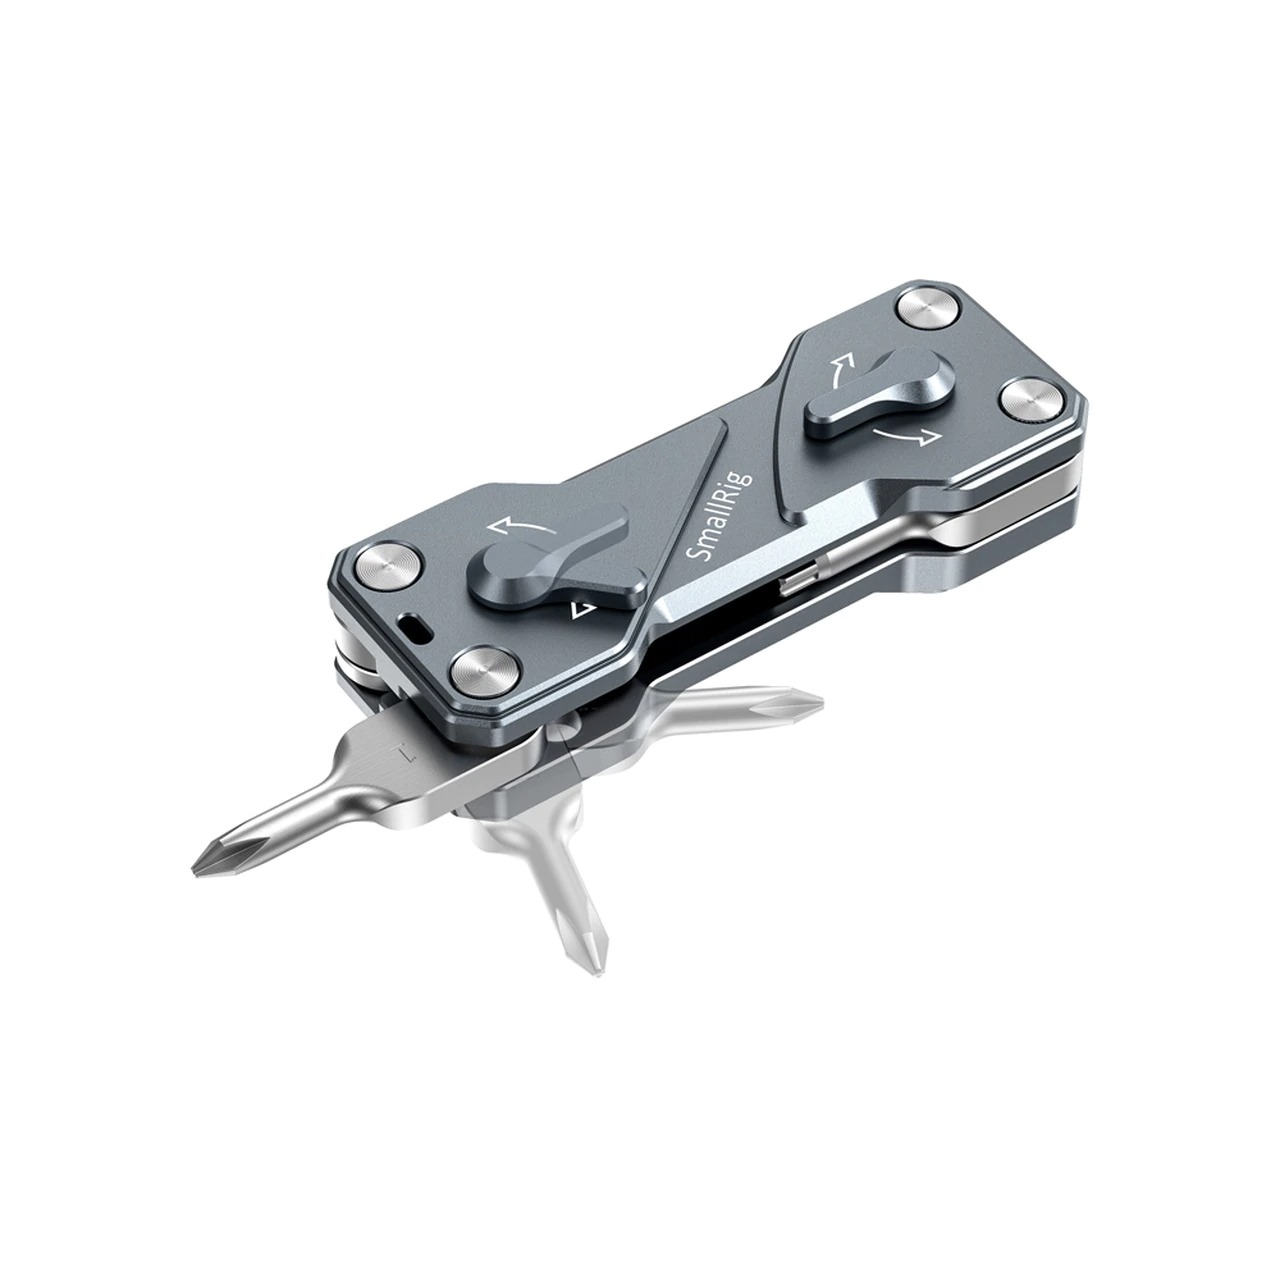 SmallRig Folding Screwdriver Kit Hunter AAK2495 ชุดไขควง 7 แบบ (ไขควงแบน, ไขควงแฉก, ประแจหกเหลี่ยมเบอร์ 2.5, 3, 4, 3/16, ประแจทอร์ค T25) ราคา 1400 บาท